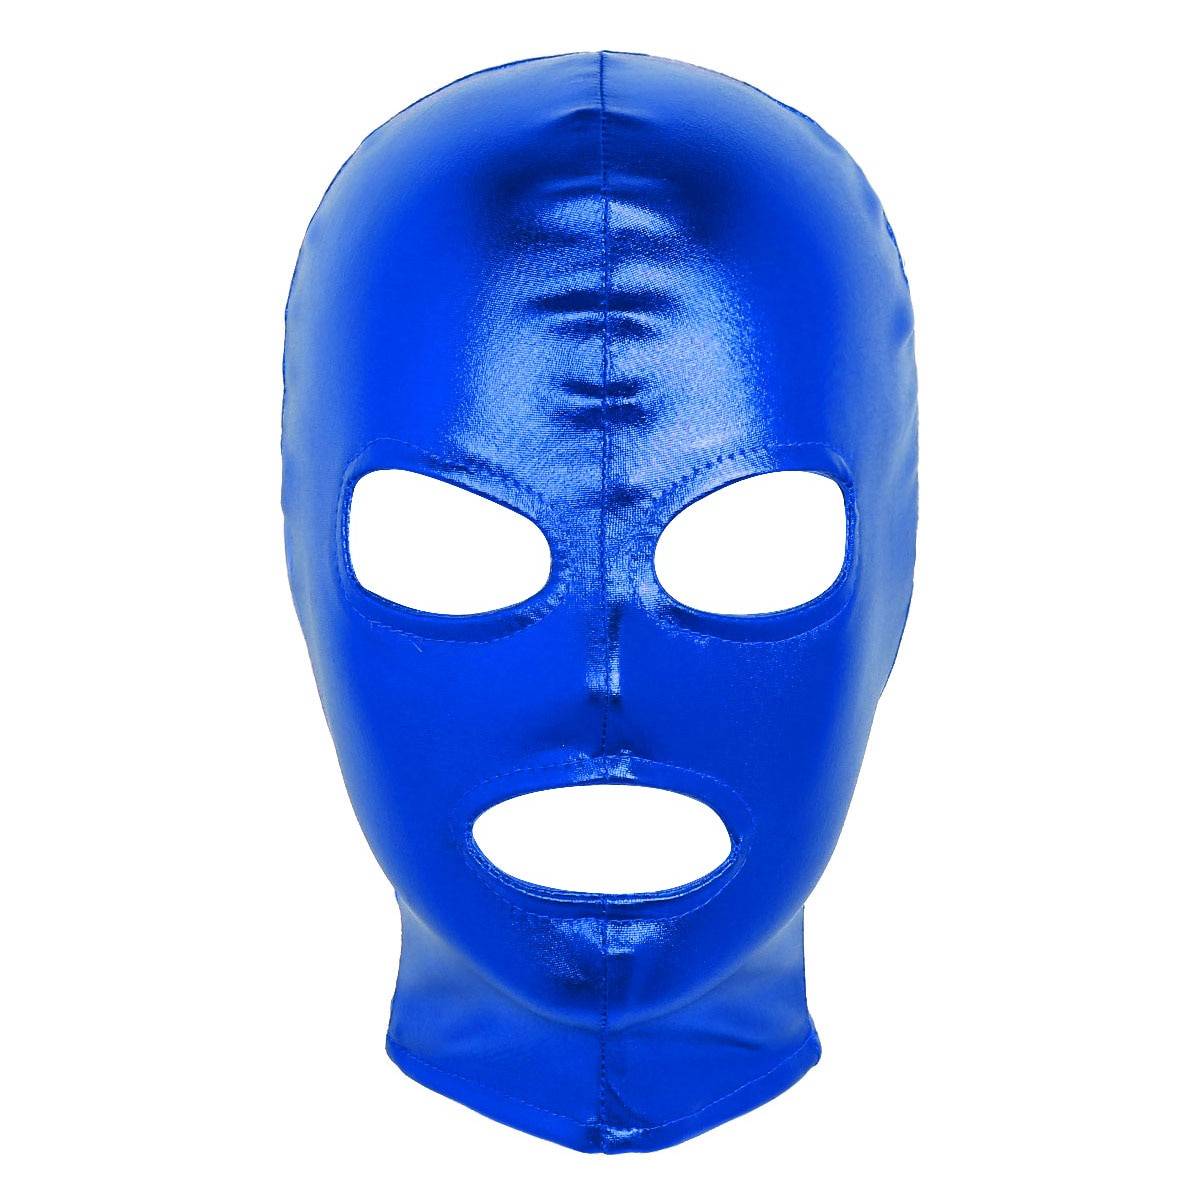 Máscara facial metálica brilhante, "unissex mulheres homens cosplay máscara do rosto látex olhos e boca abertos máscara facial capuz para fantasia de dramatização